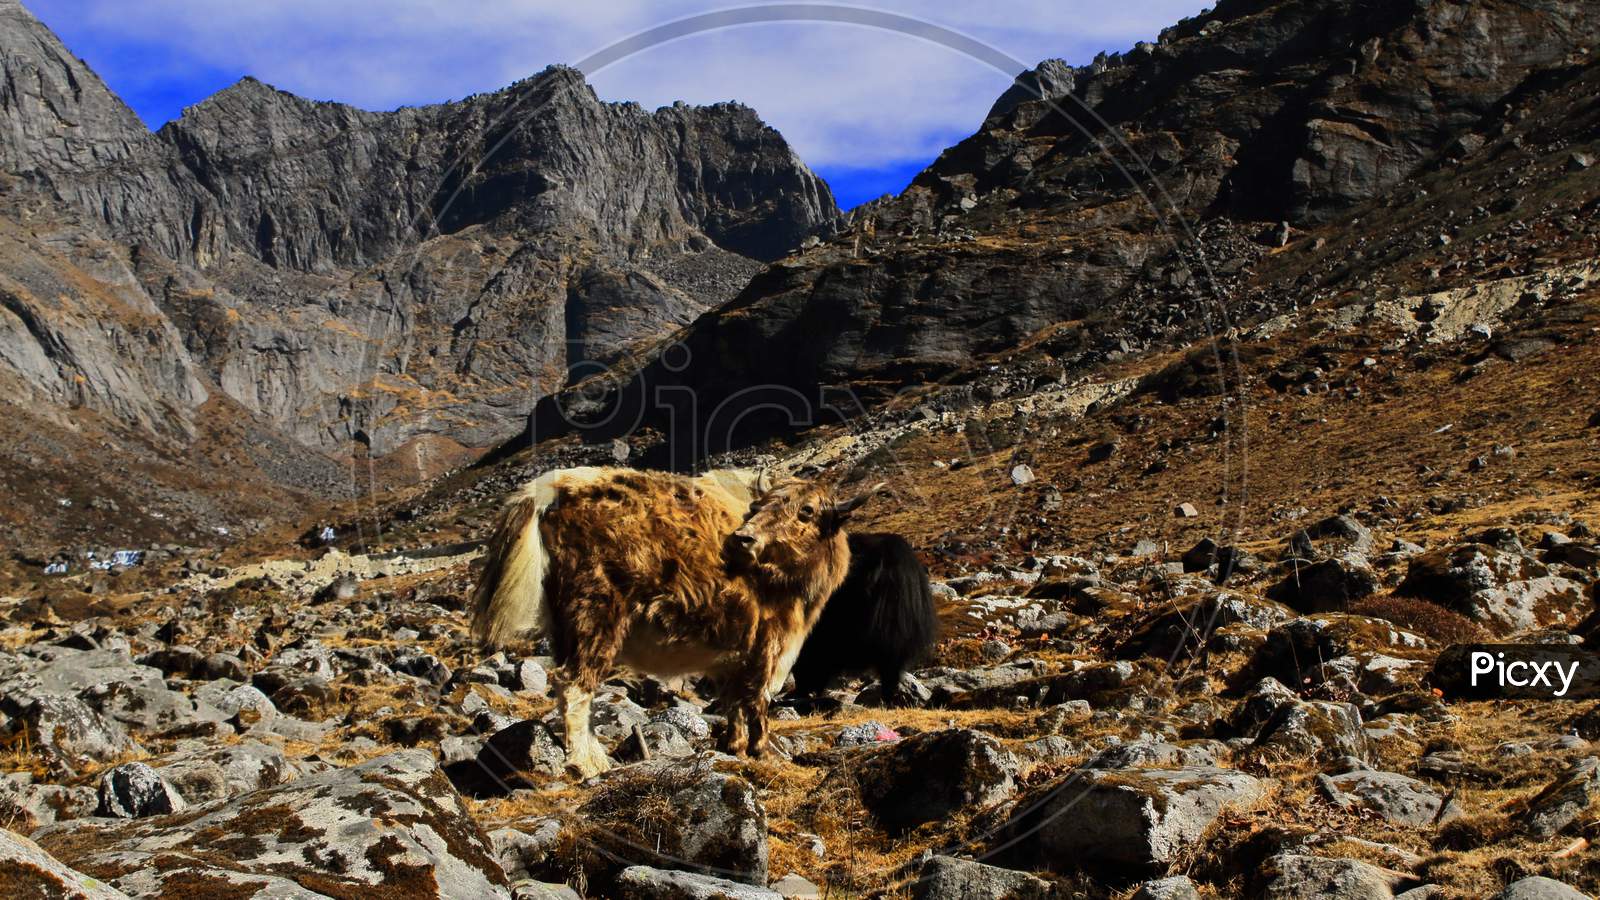 a domestic yak at sela pass. rocky, arid and alpine sela pass situated high himalayan region near tawang hill station in arunachal pradesh, north east india